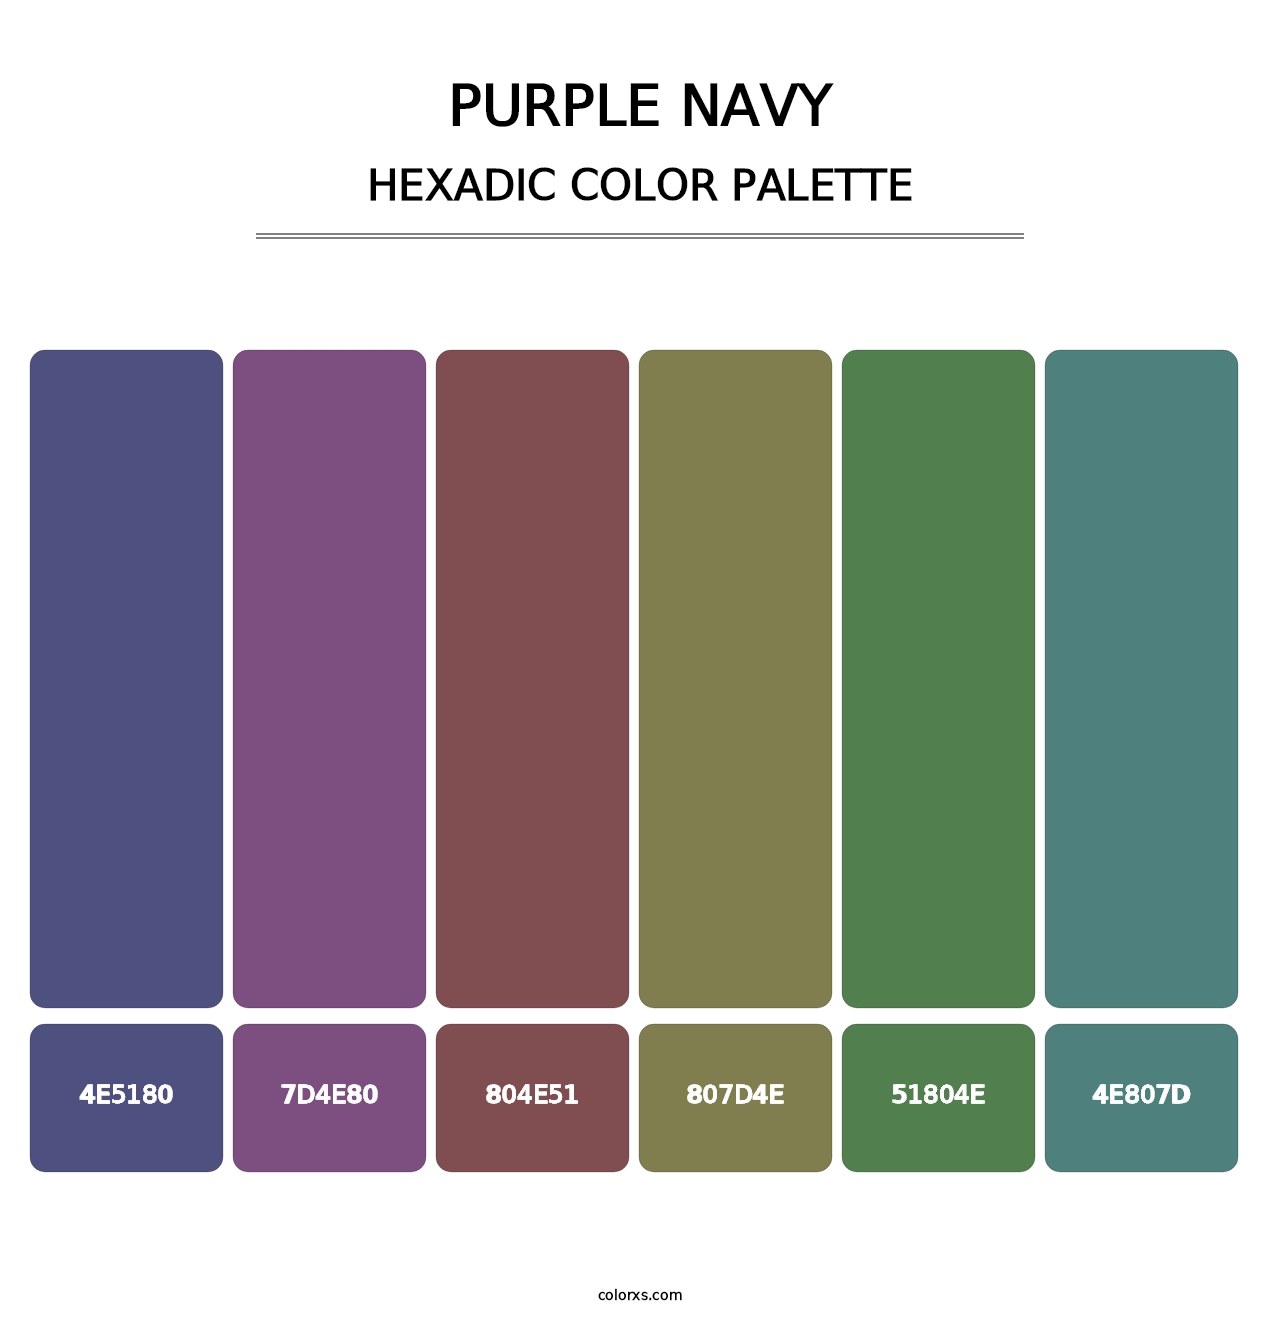 Purple Navy - Hexadic Color Palette